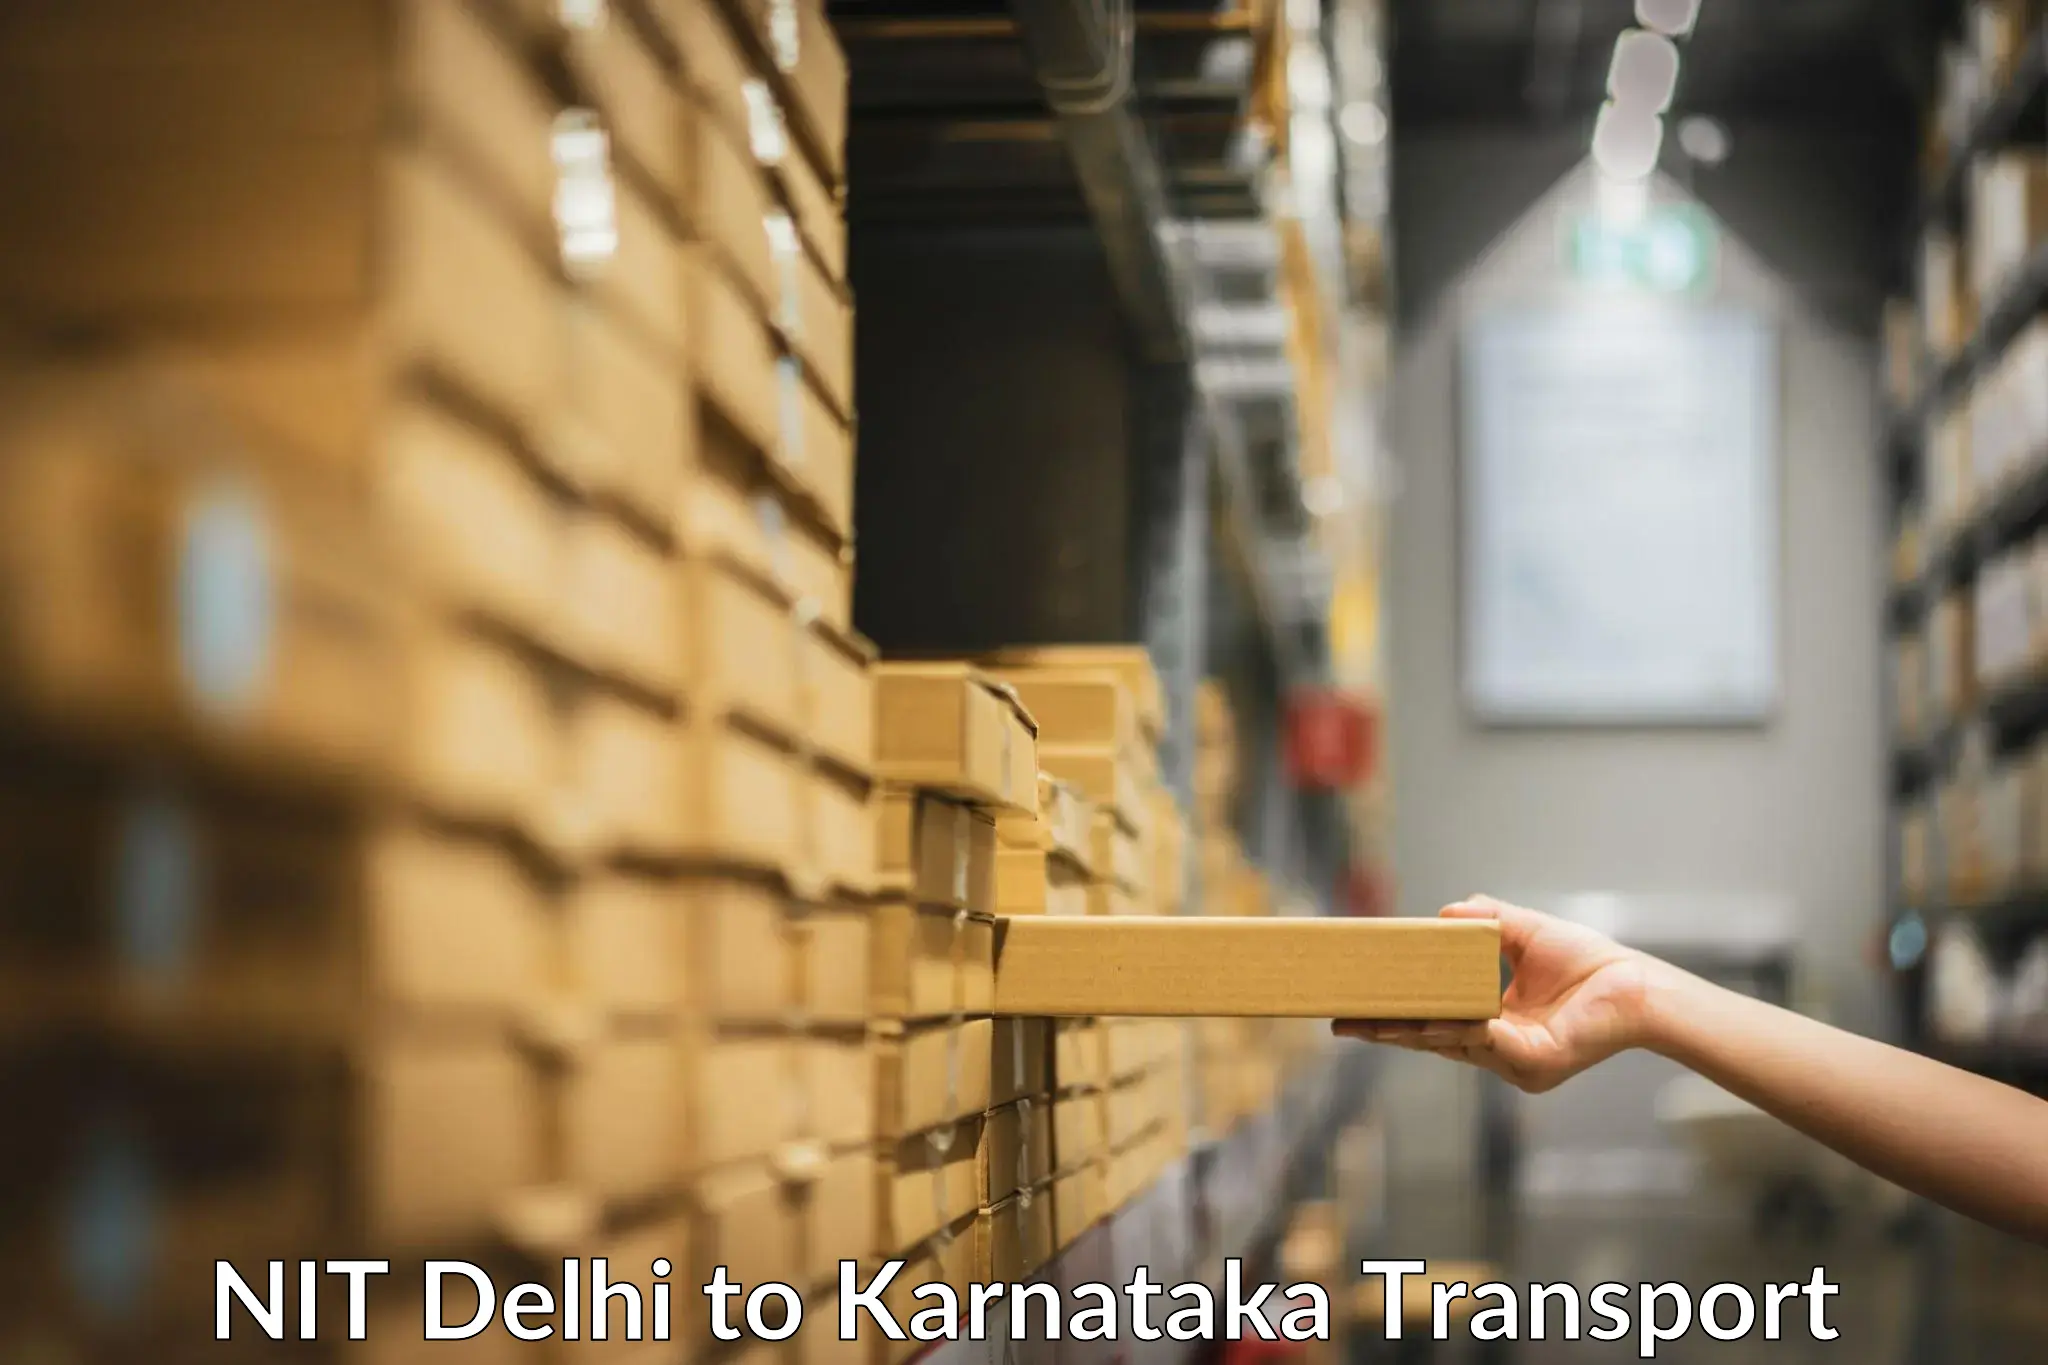 Goods delivery service NIT Delhi to Basavanagudi